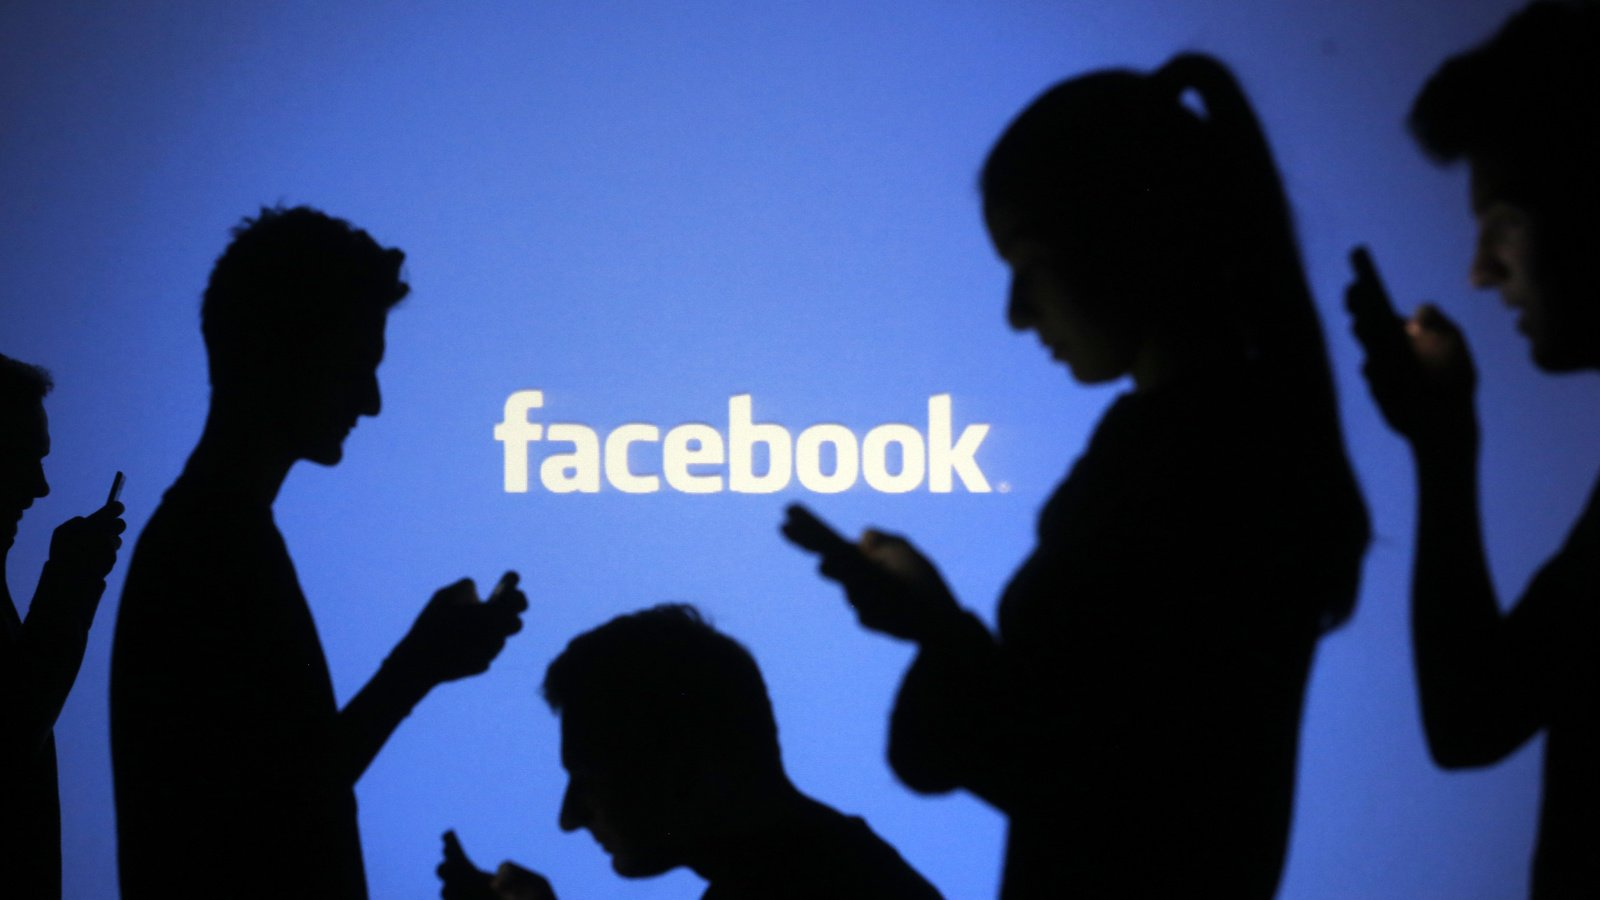 How to do Facebook social marketing?